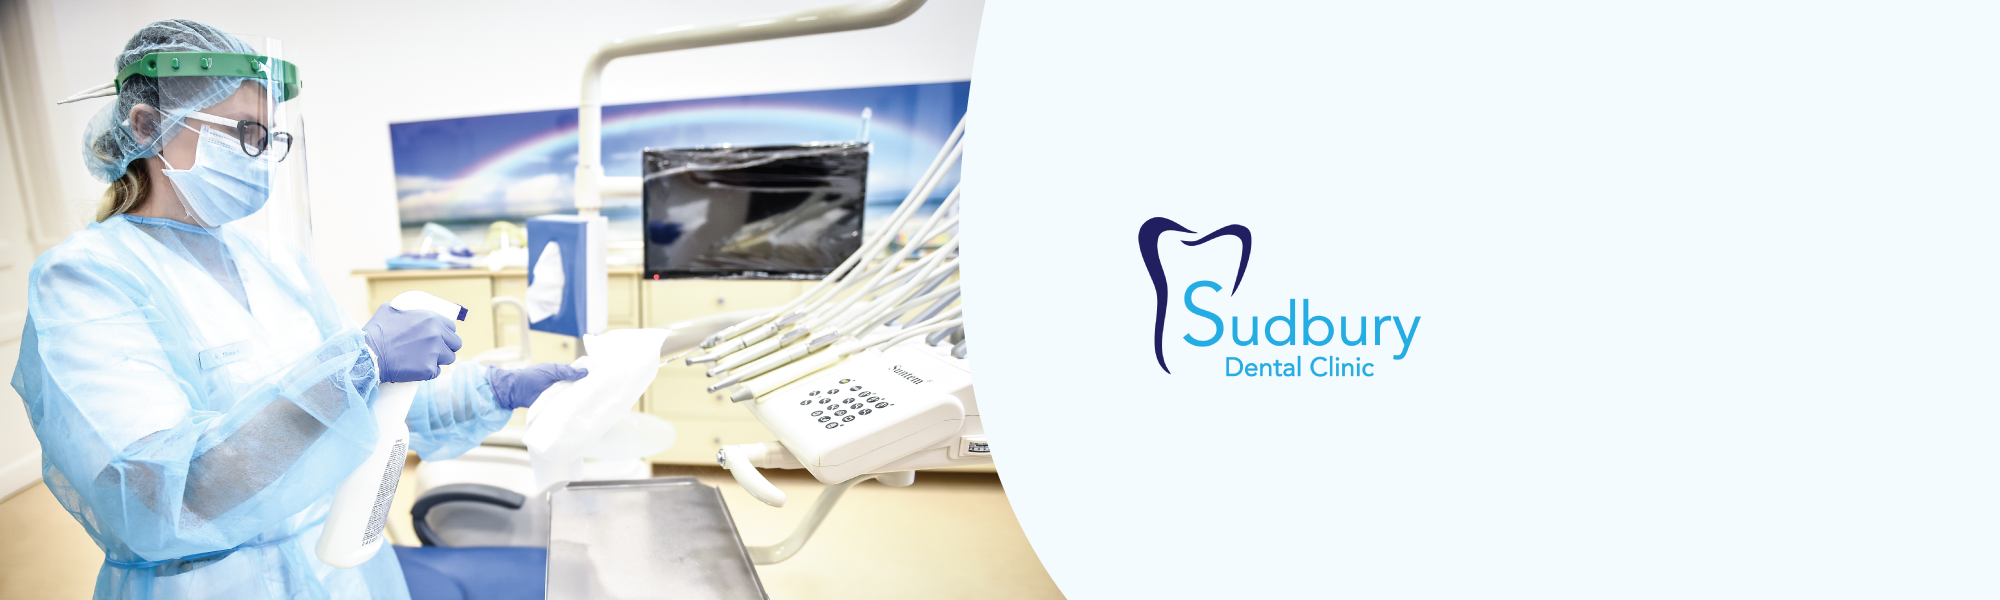 Covid Sudbury Dental Clinic Dentists